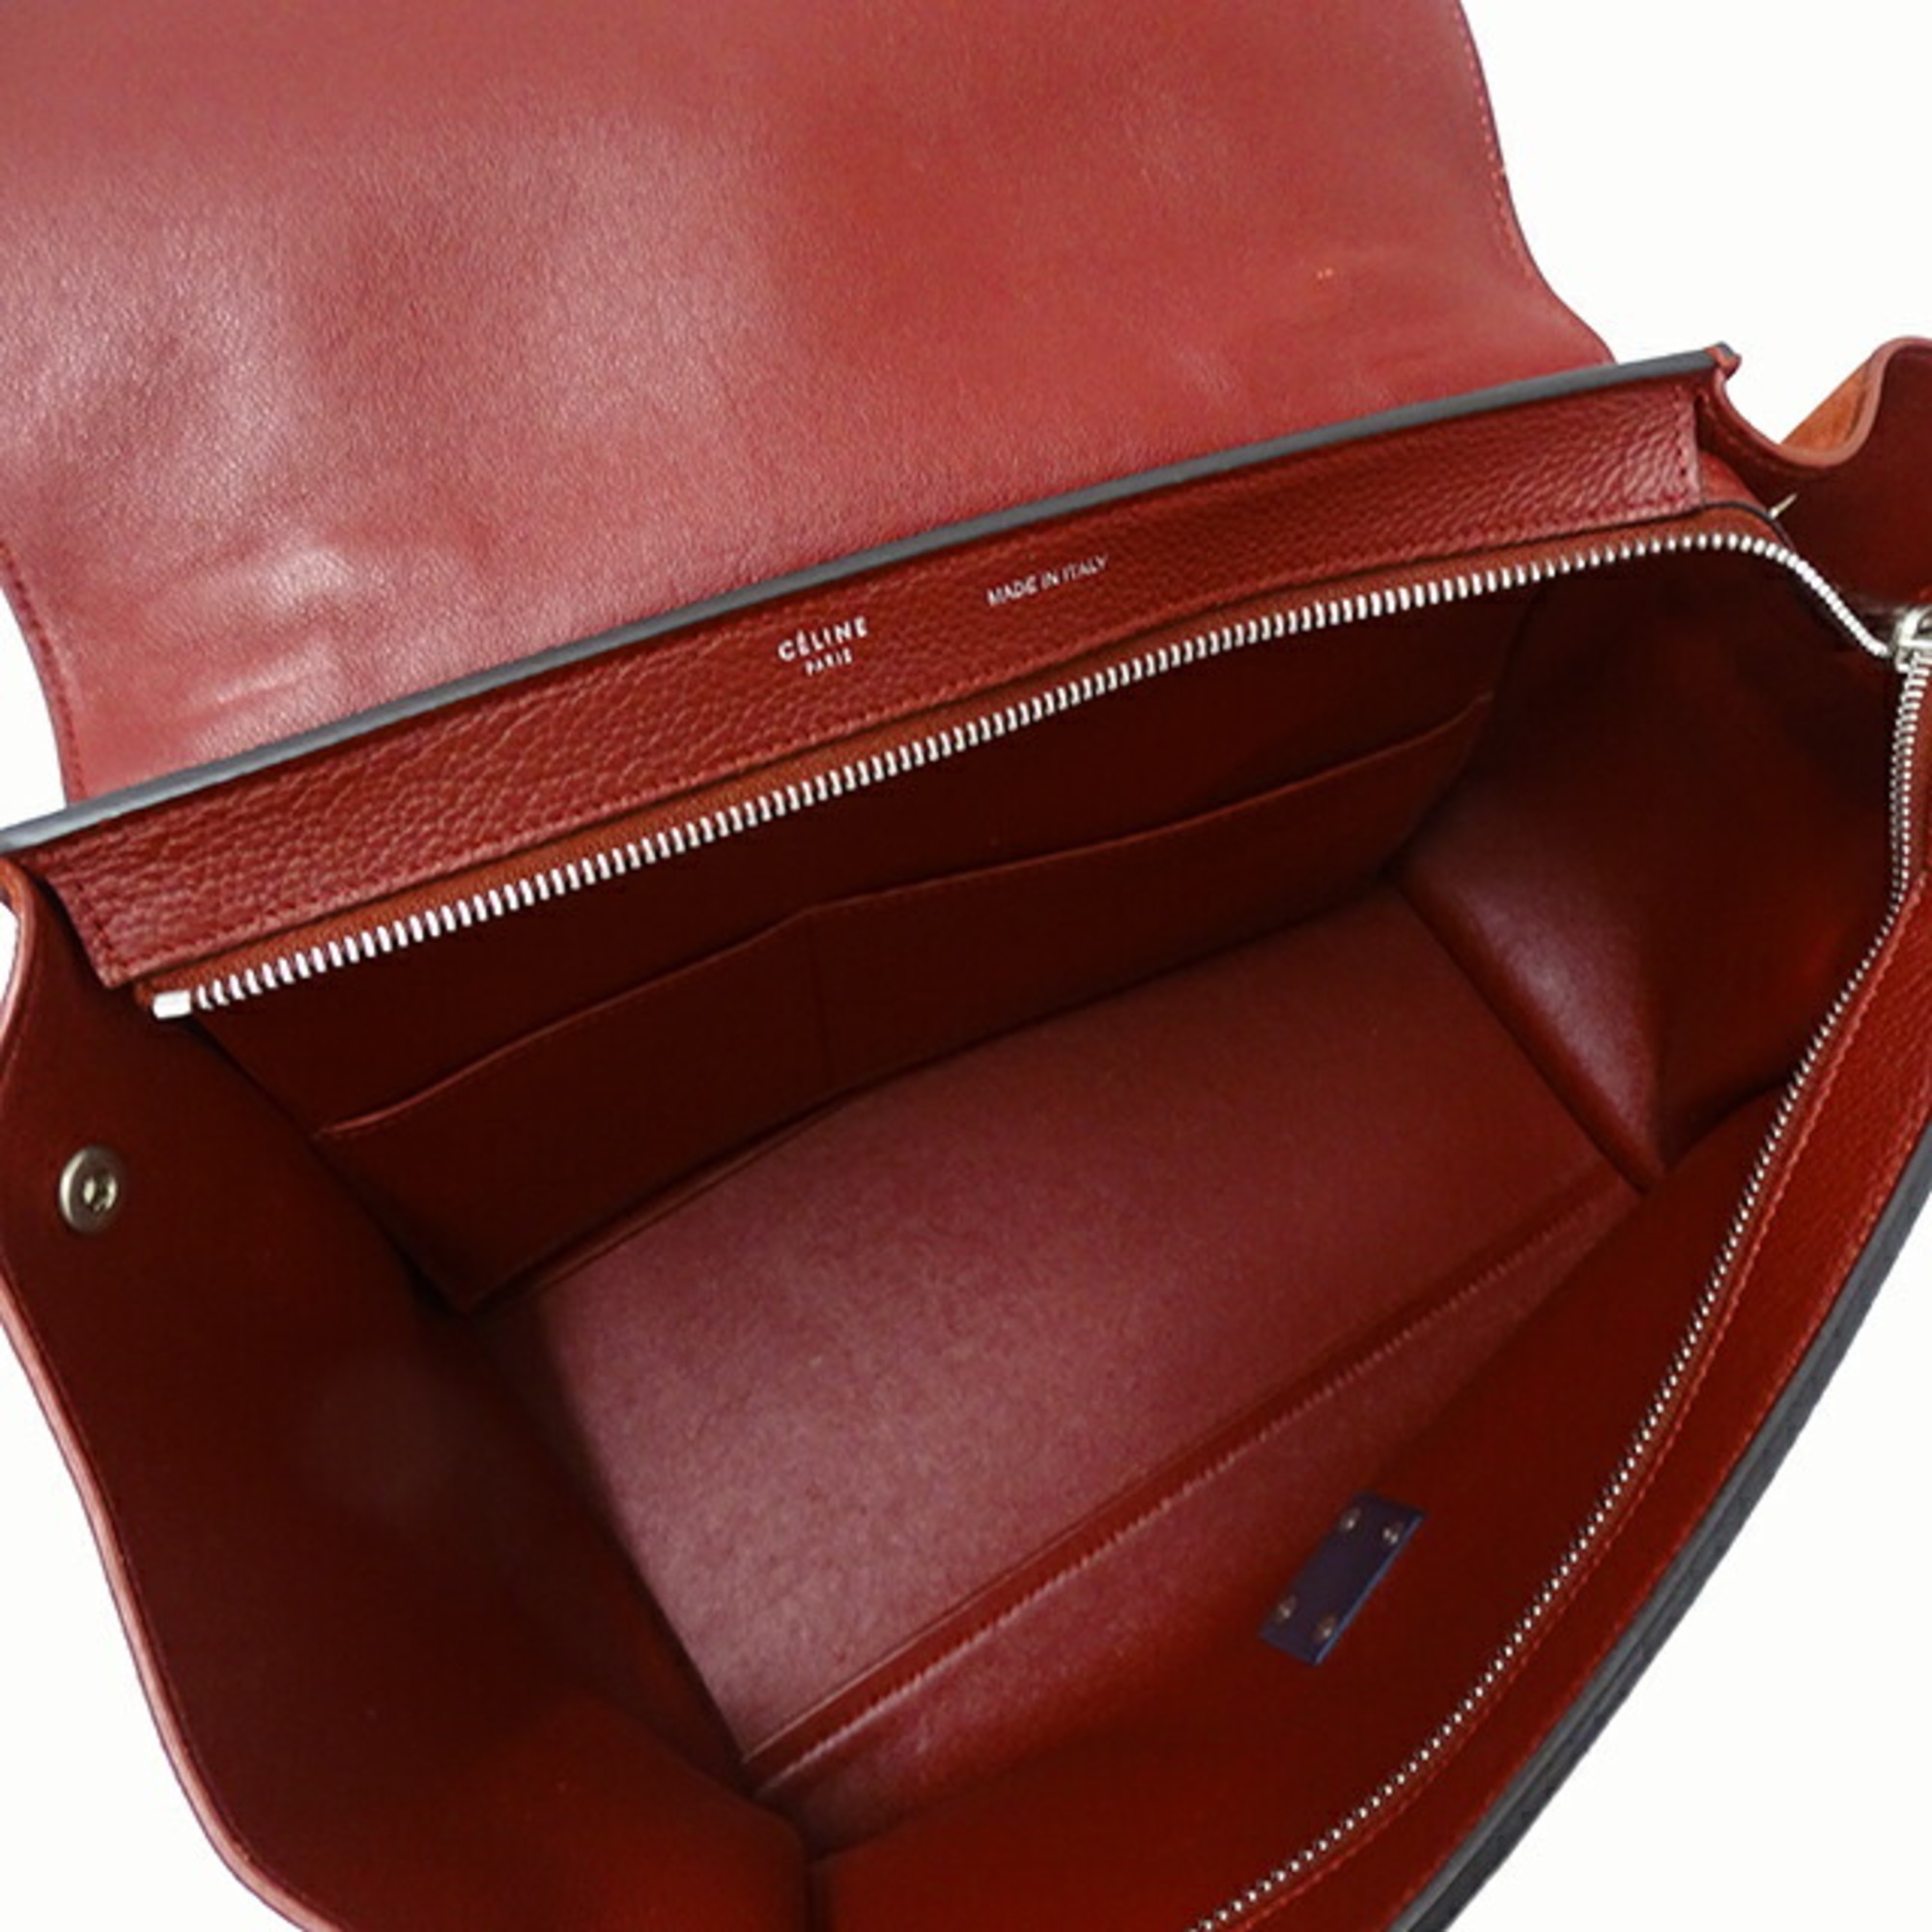 CELINE Bag Women's Handbag Shoulder 2way Leather Trapeze Small Red